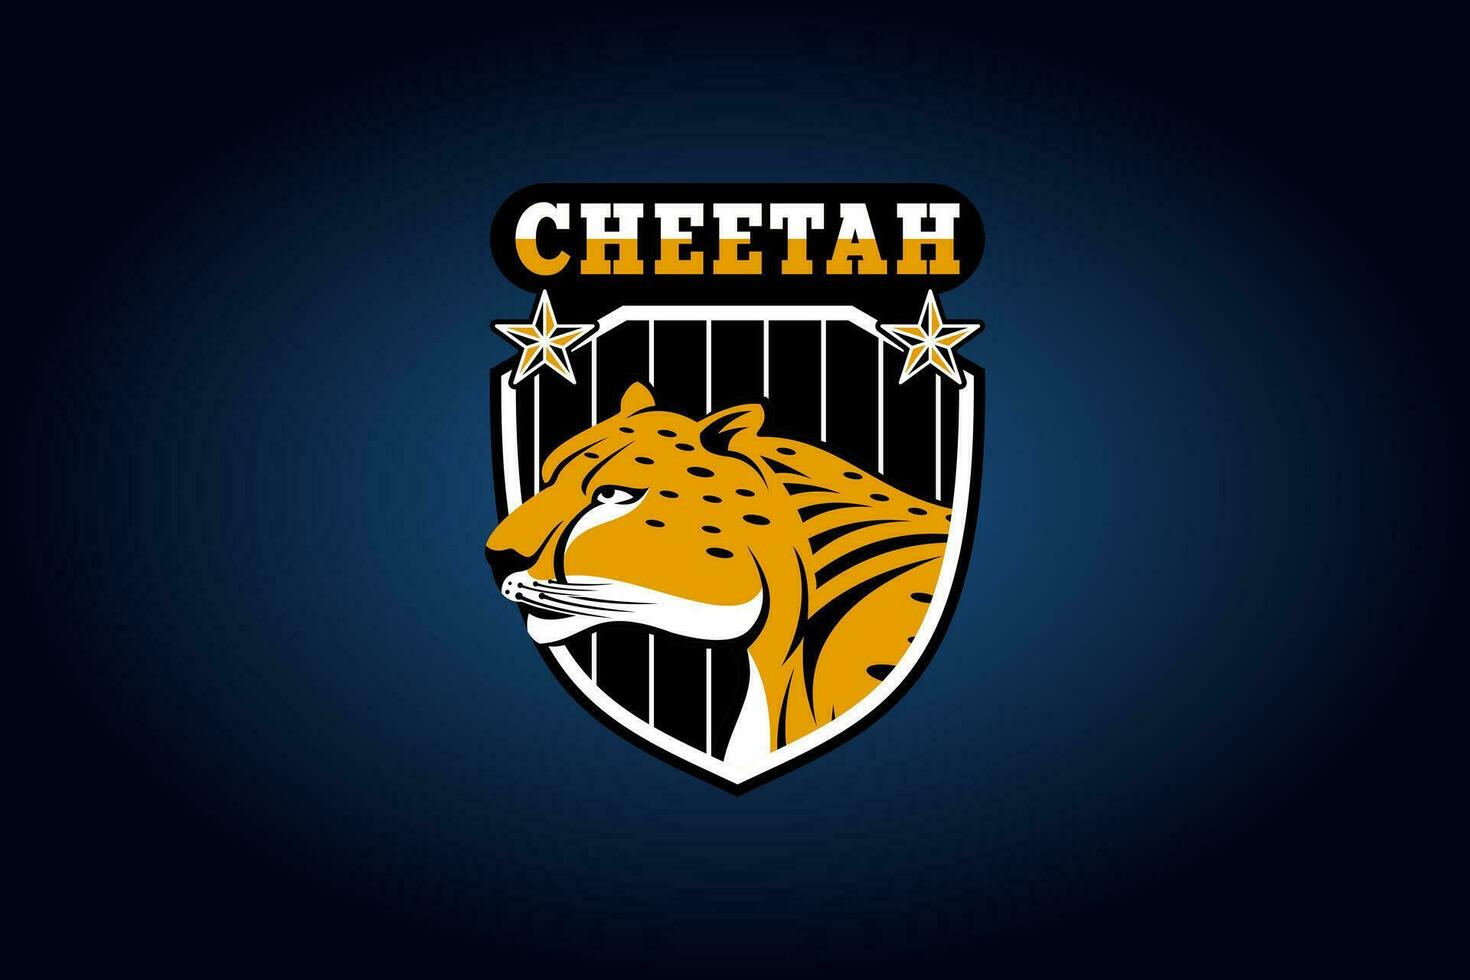 Cheetah head shield mascot logo vector illustration design